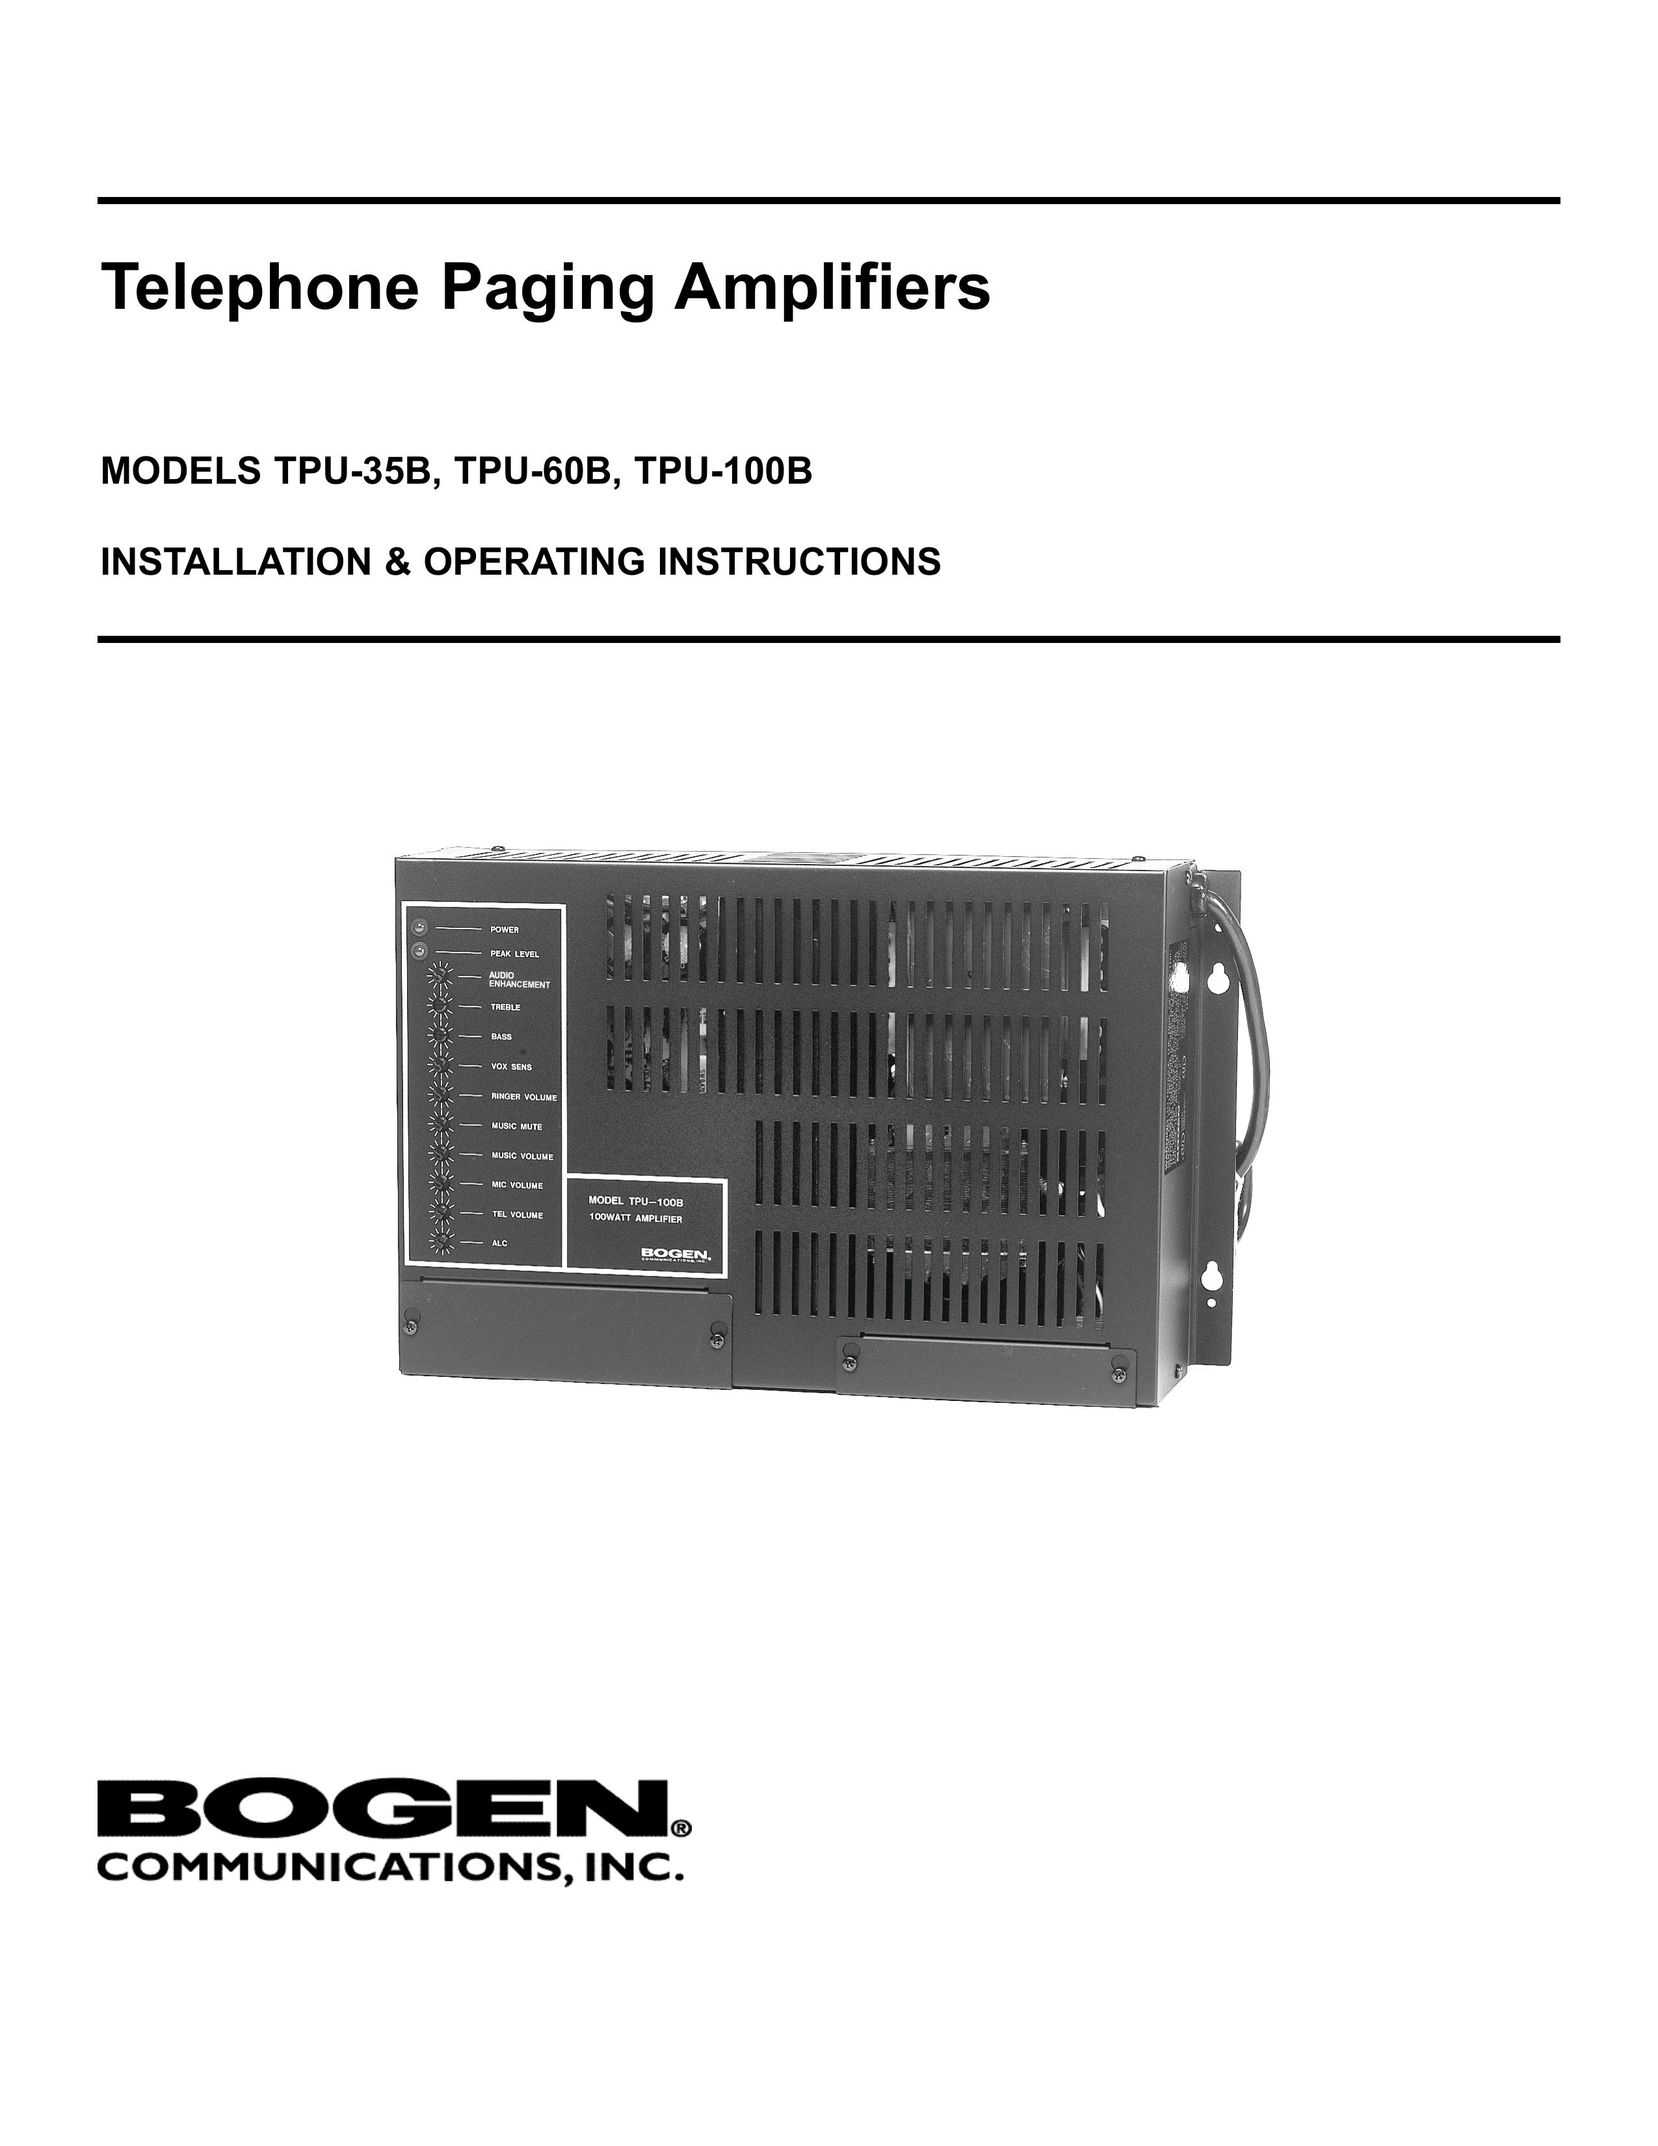 Bogen TPU-100B Amplified Phone User Manual